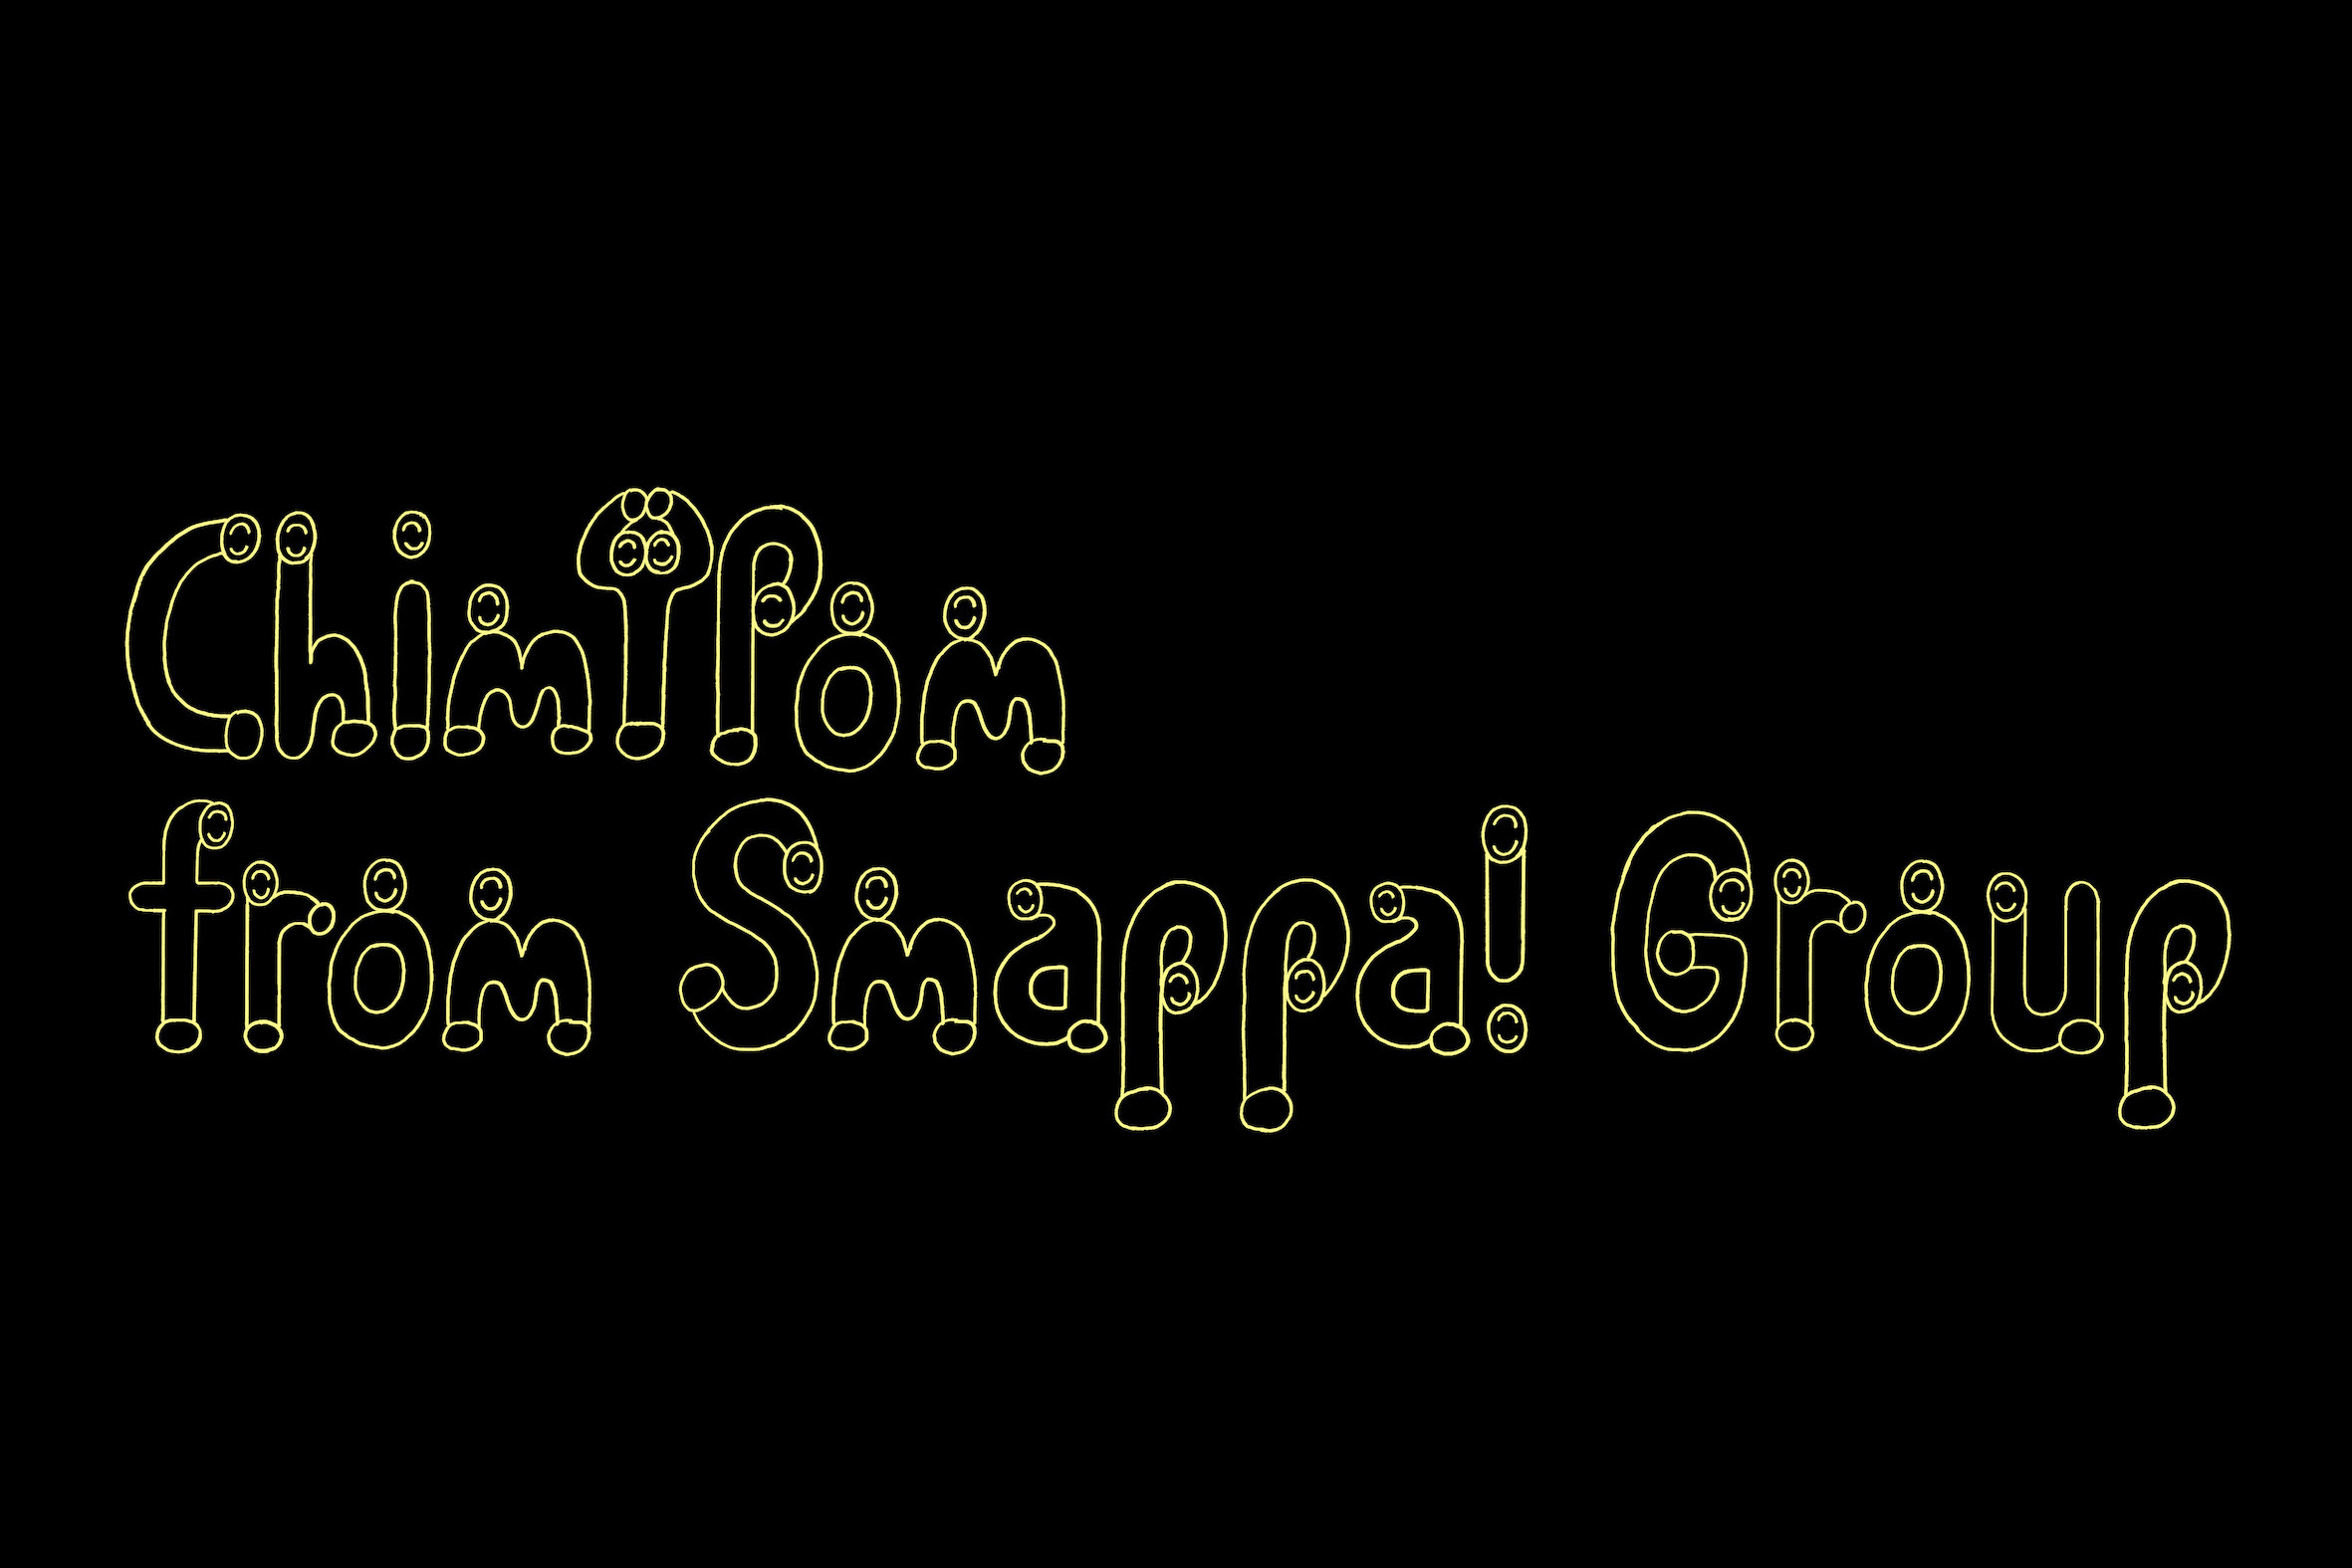 Chim↑Pomが改名し、Chim↑Pom from Smappa!Groupに。森美術館への異議 